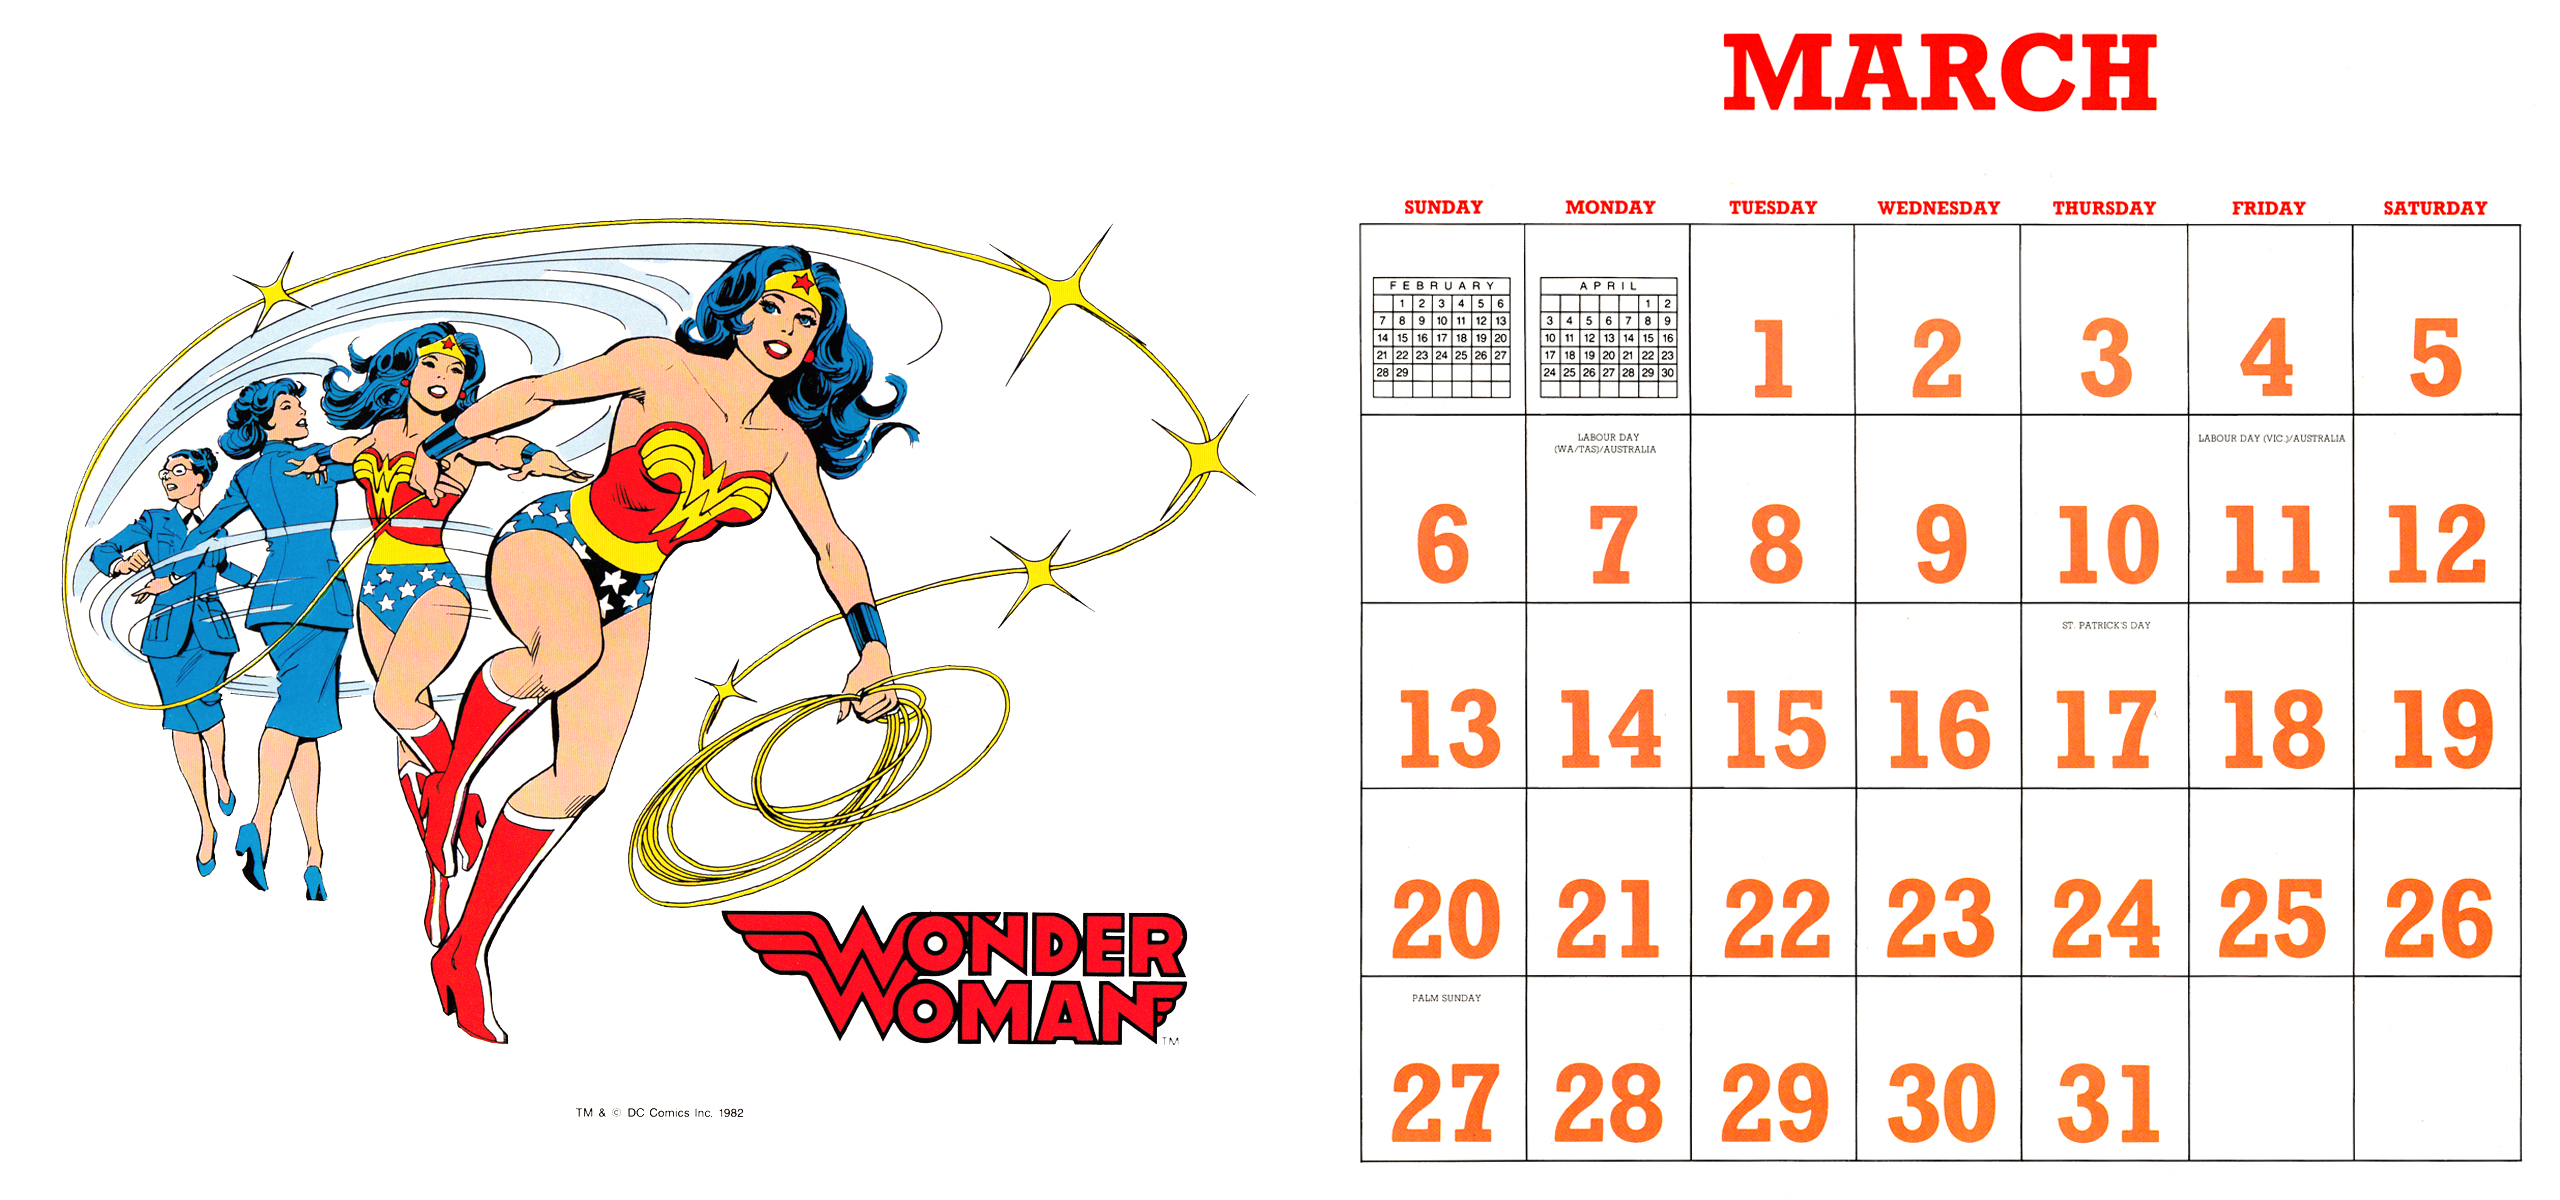 DC Super Powers 19882016 Wallpaper Calendar   Andertoons Cartoon Blog